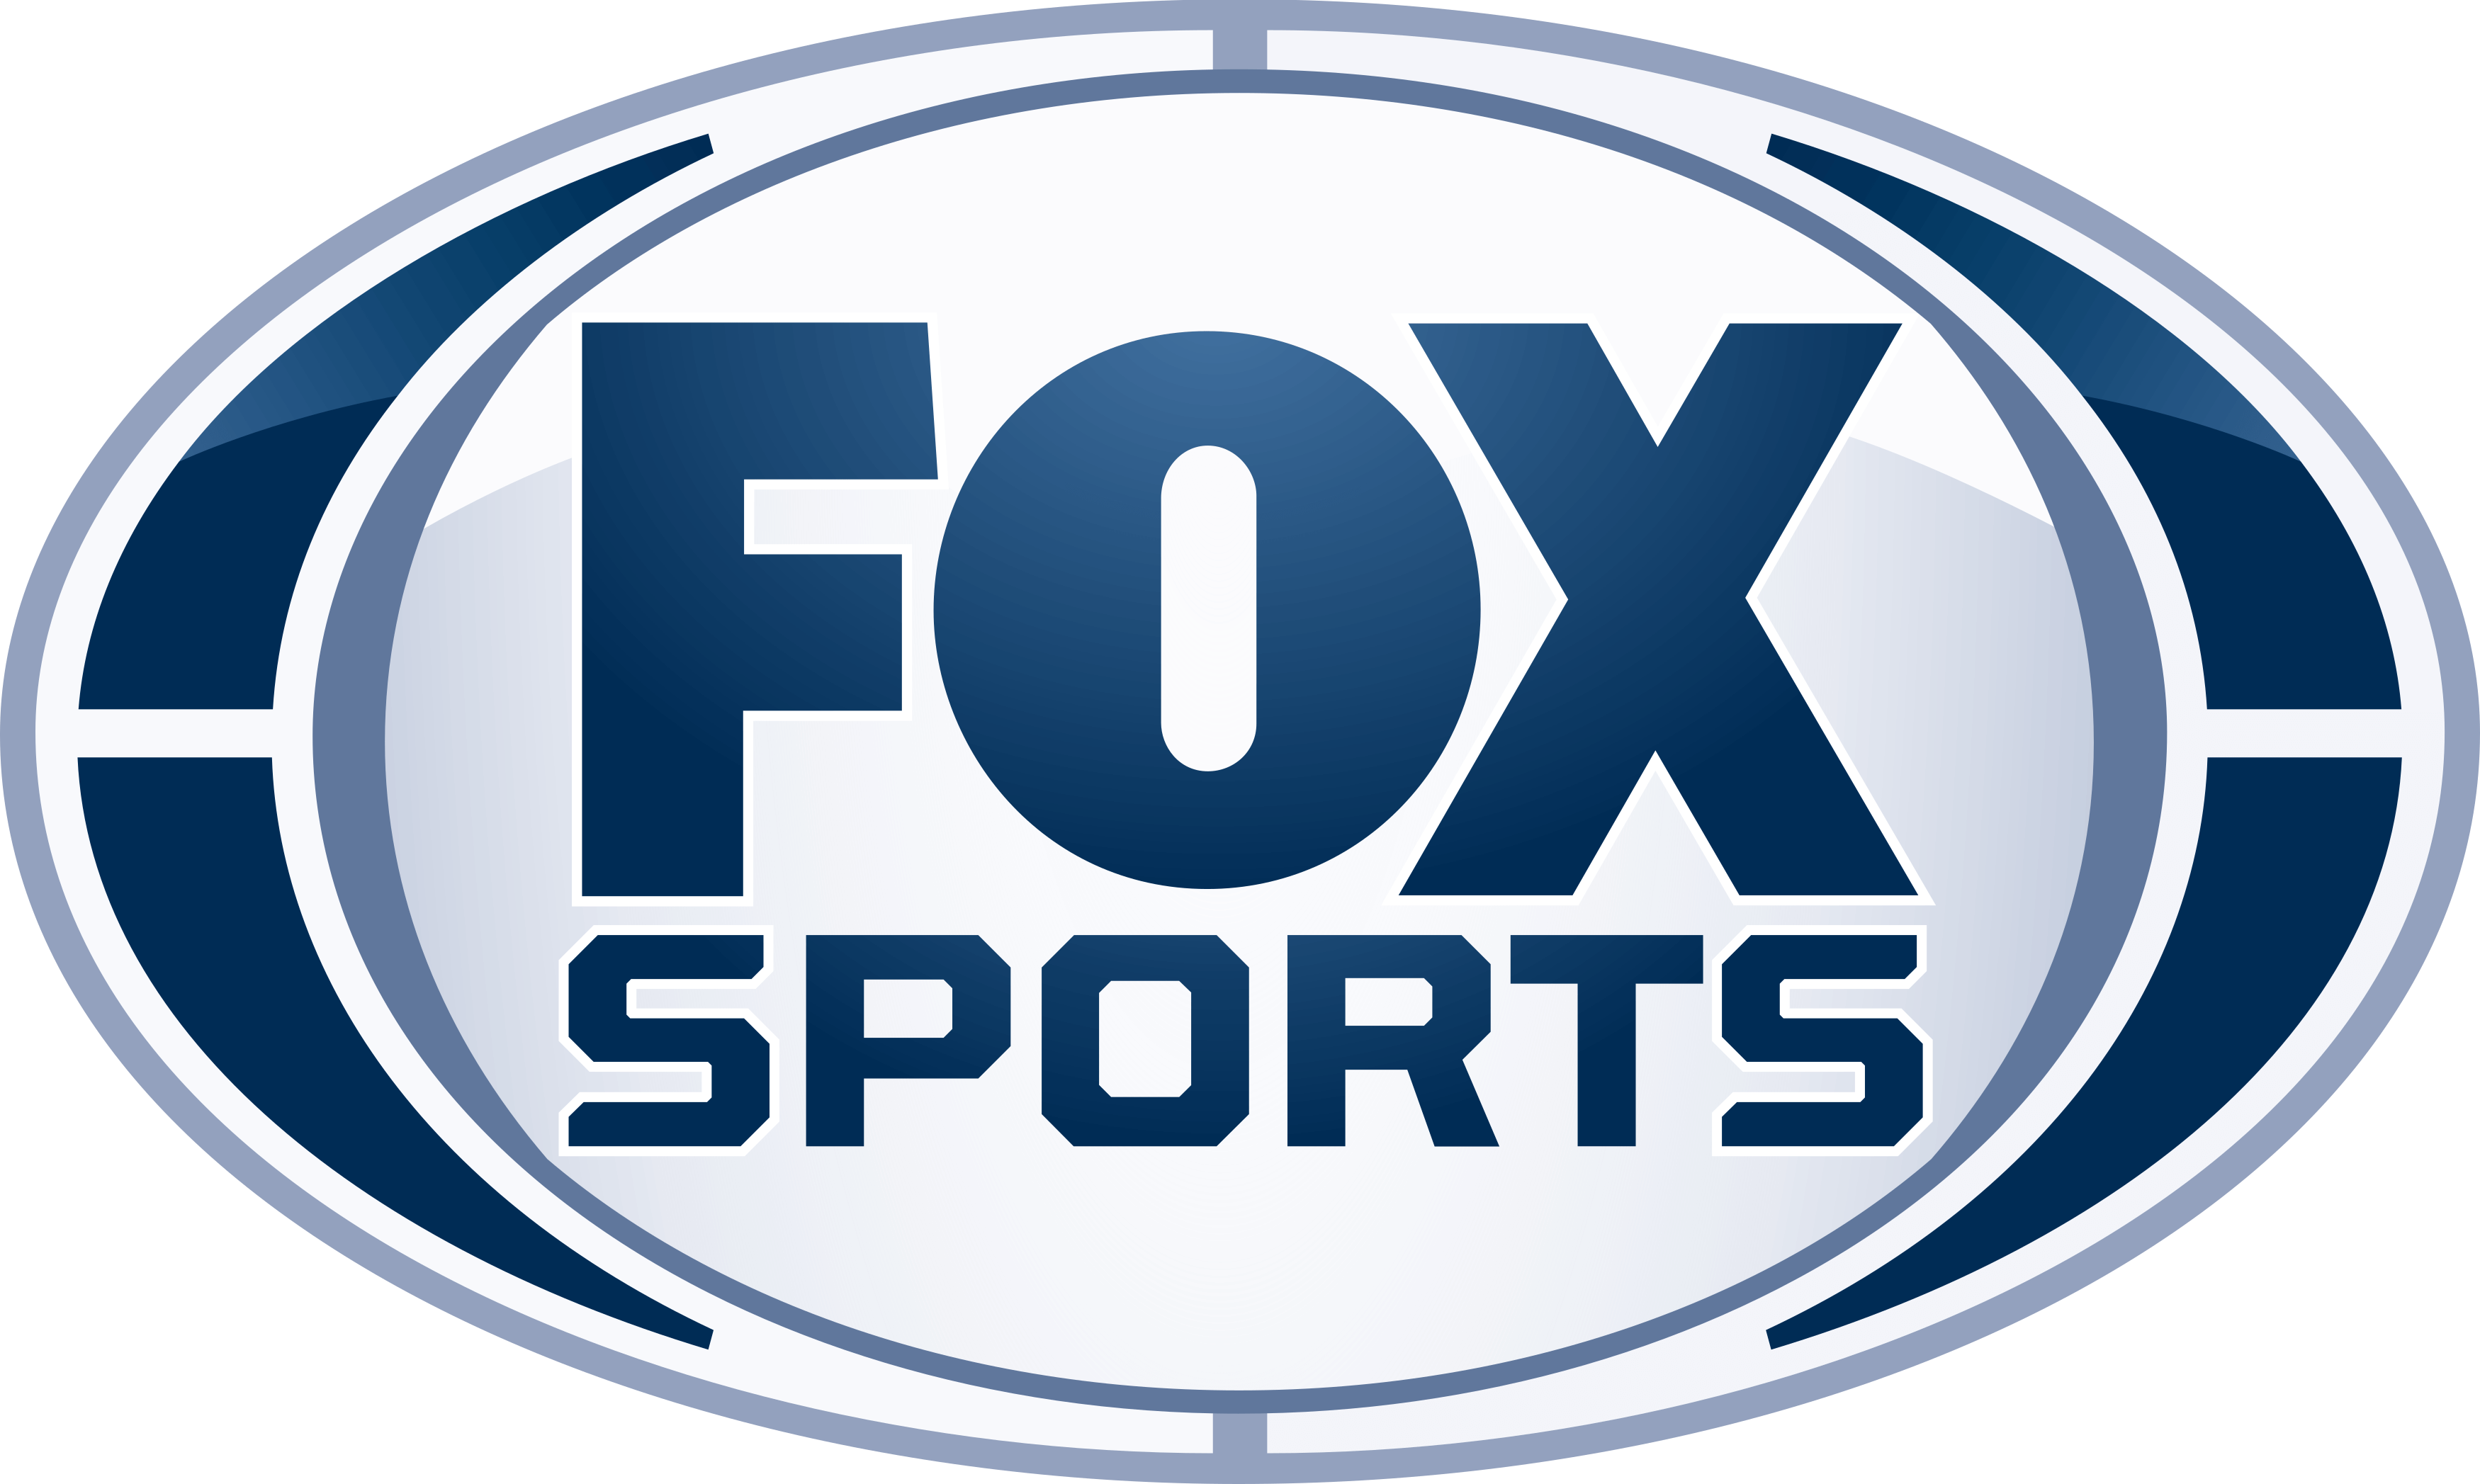 Fox sport